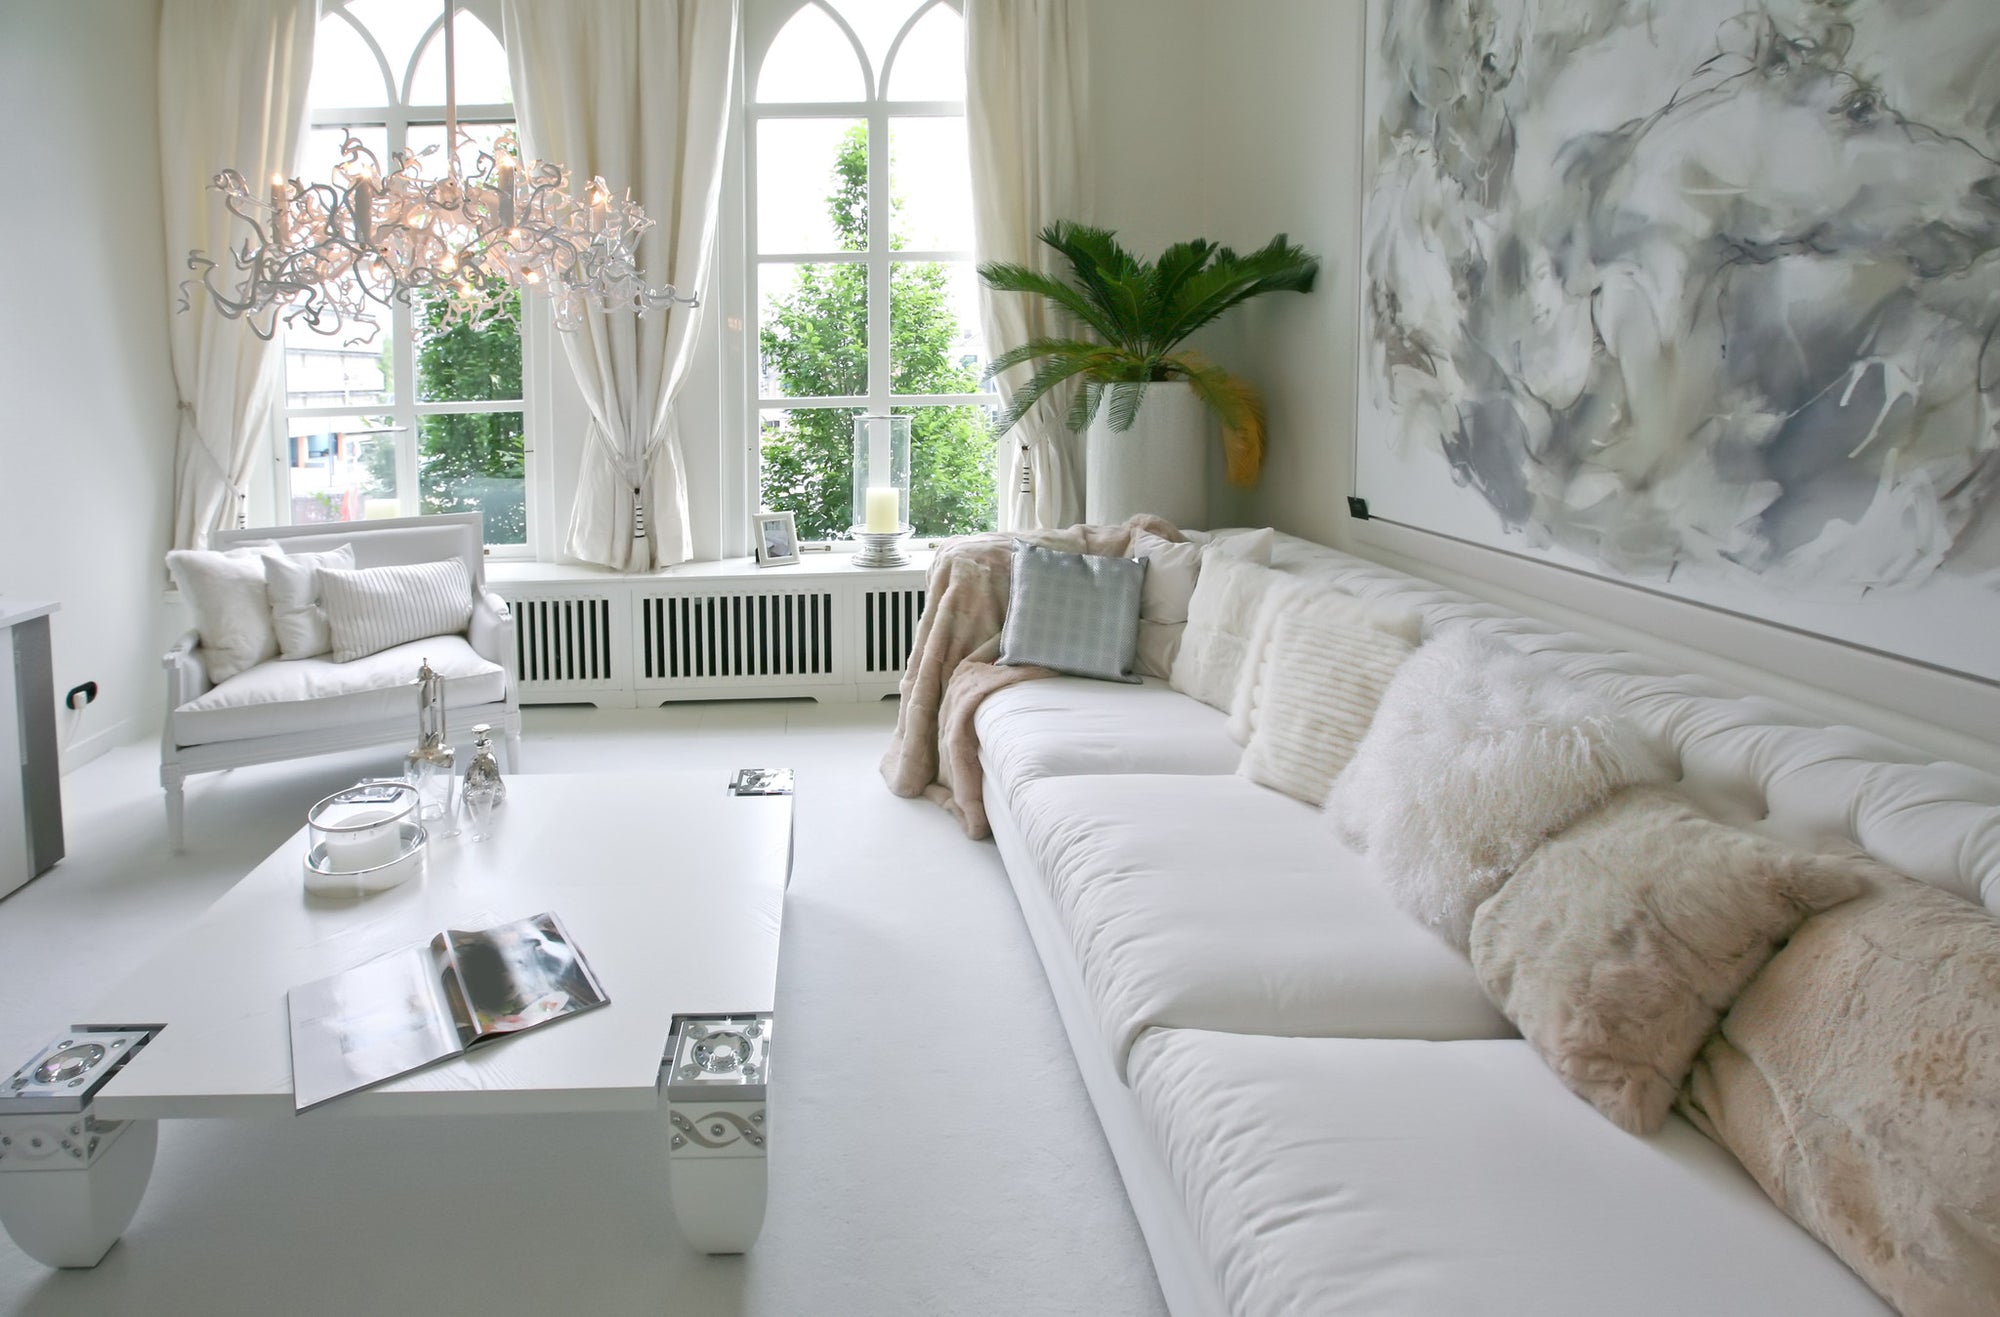 Five Tips to Make Your Living Room Look Like a Million Bucks